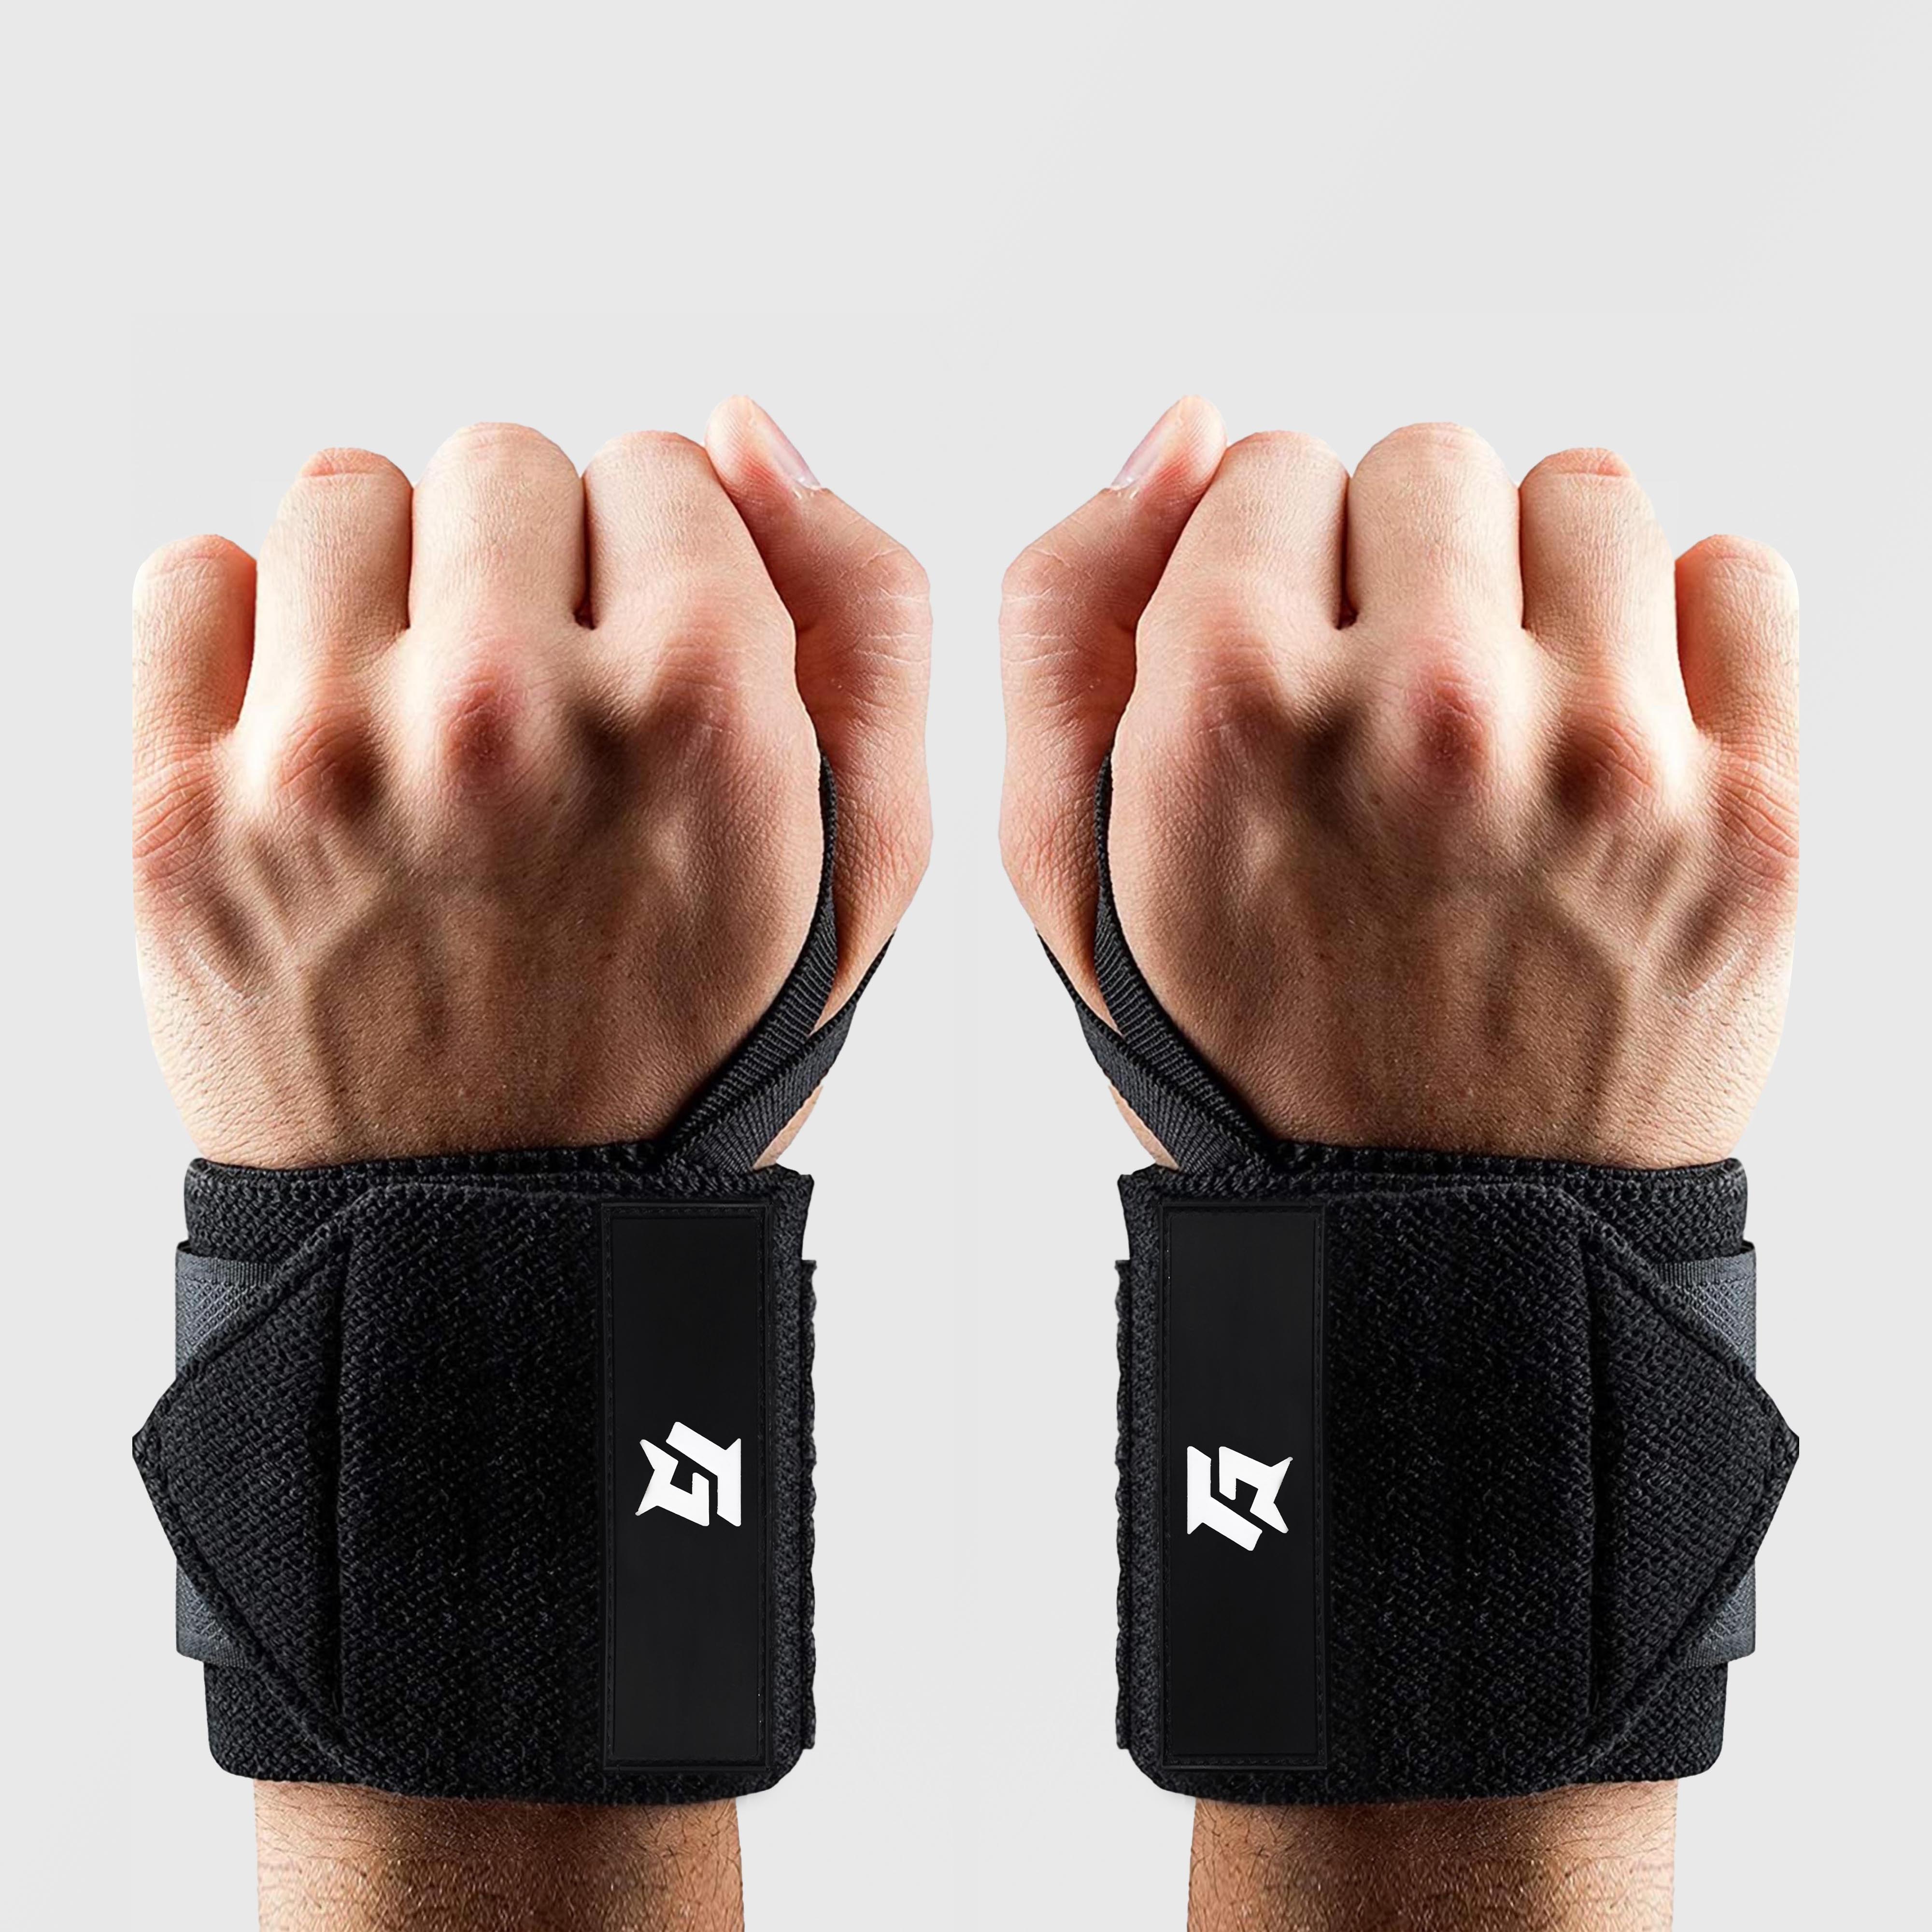 GA Wrist Support Band 2.0 (Black)